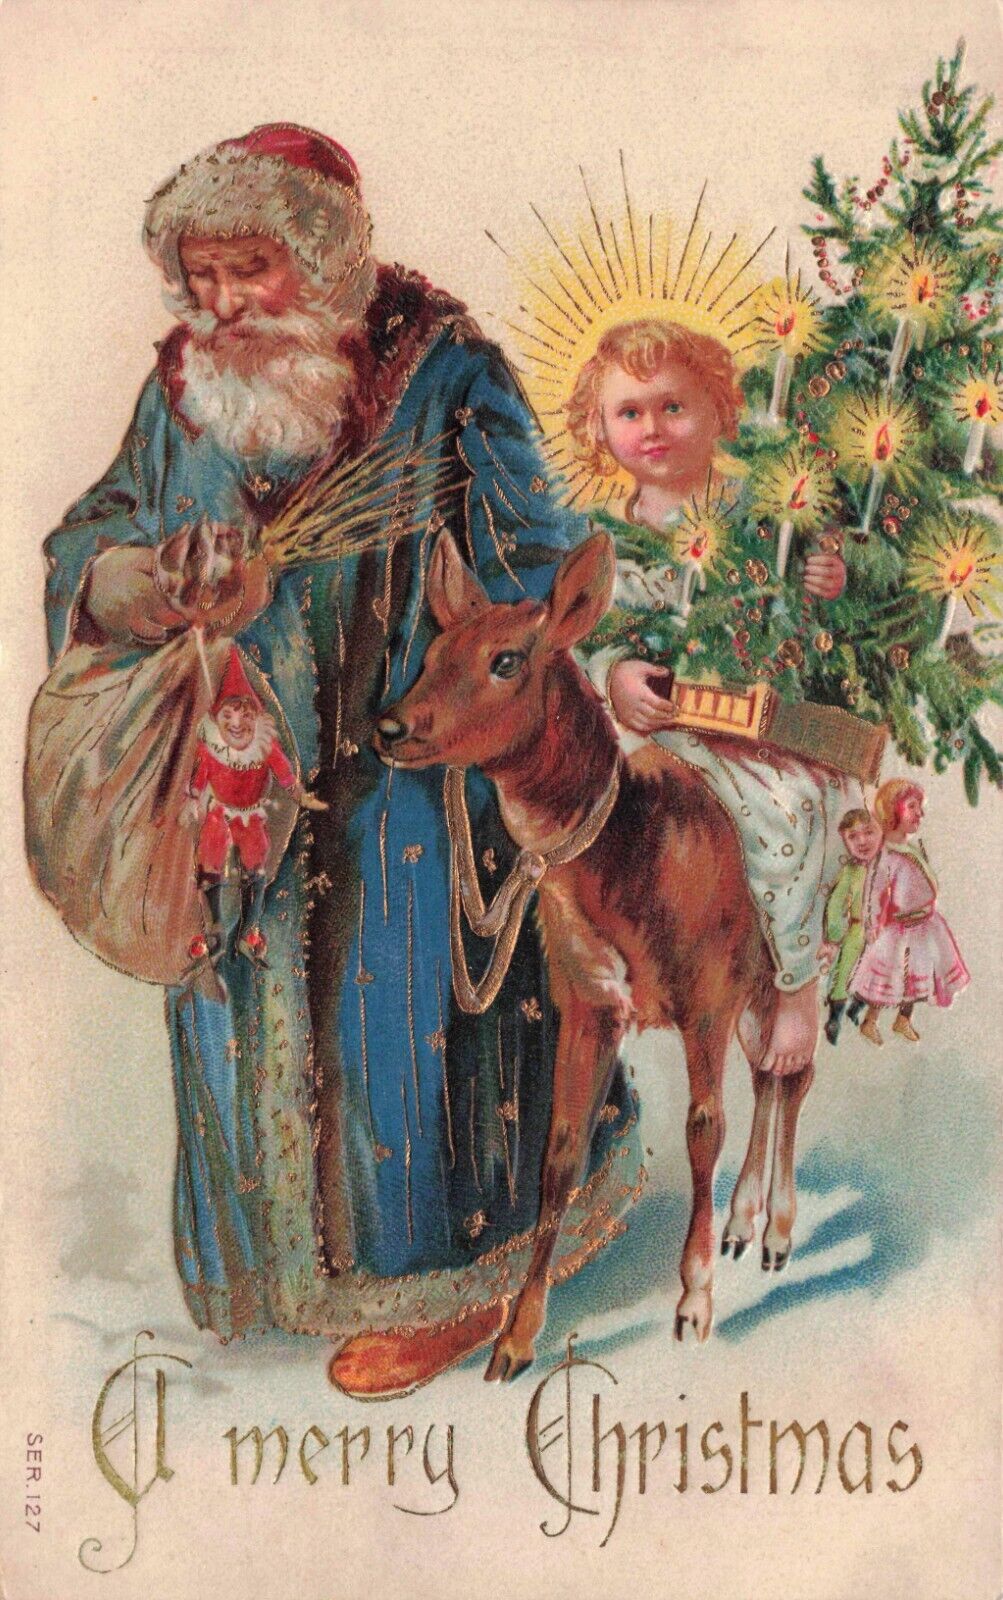 Blue Suit Santa Claus Leading Christ Child Toys Christmas Tree c1904 Postcard